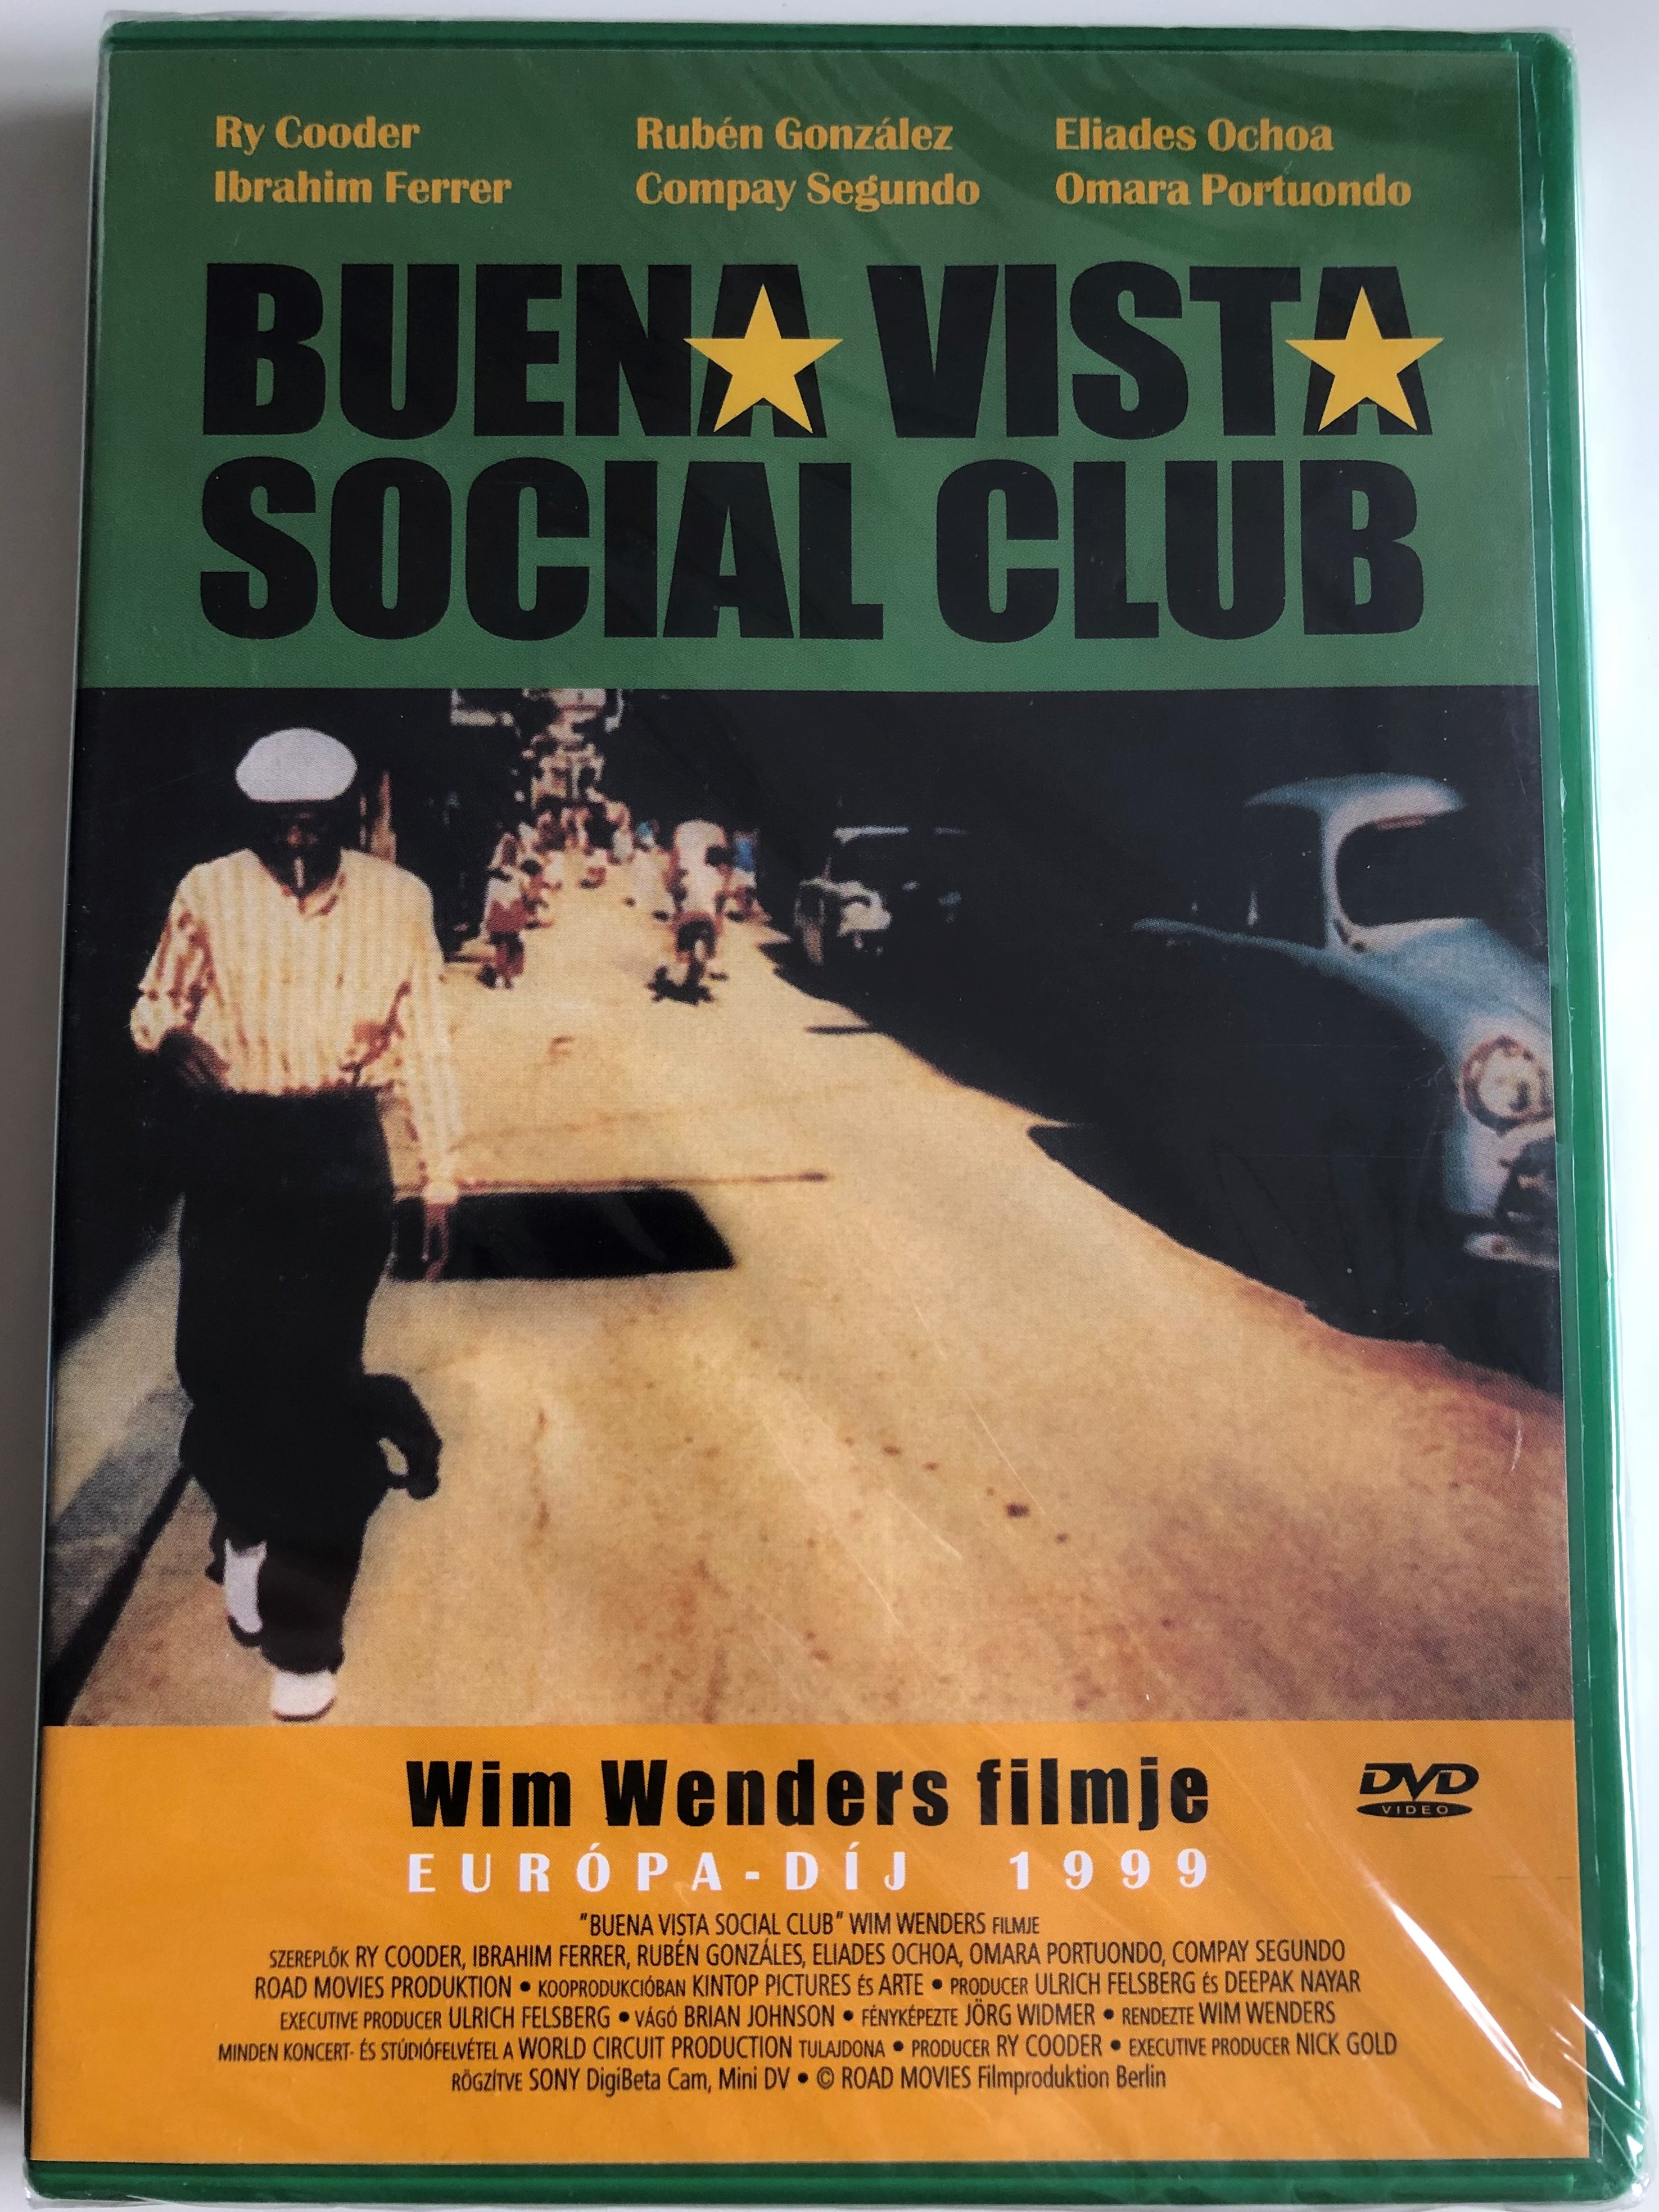 Buena Vista Social Club DVD 1998 / Directed by Wim Wenders / Featuring:  Ibrahim Ferrer, Rubén González, Compay Segundo, Eliades Ochoa, Ry Cooder,  Omara Portuondo - bibleinmylanguage